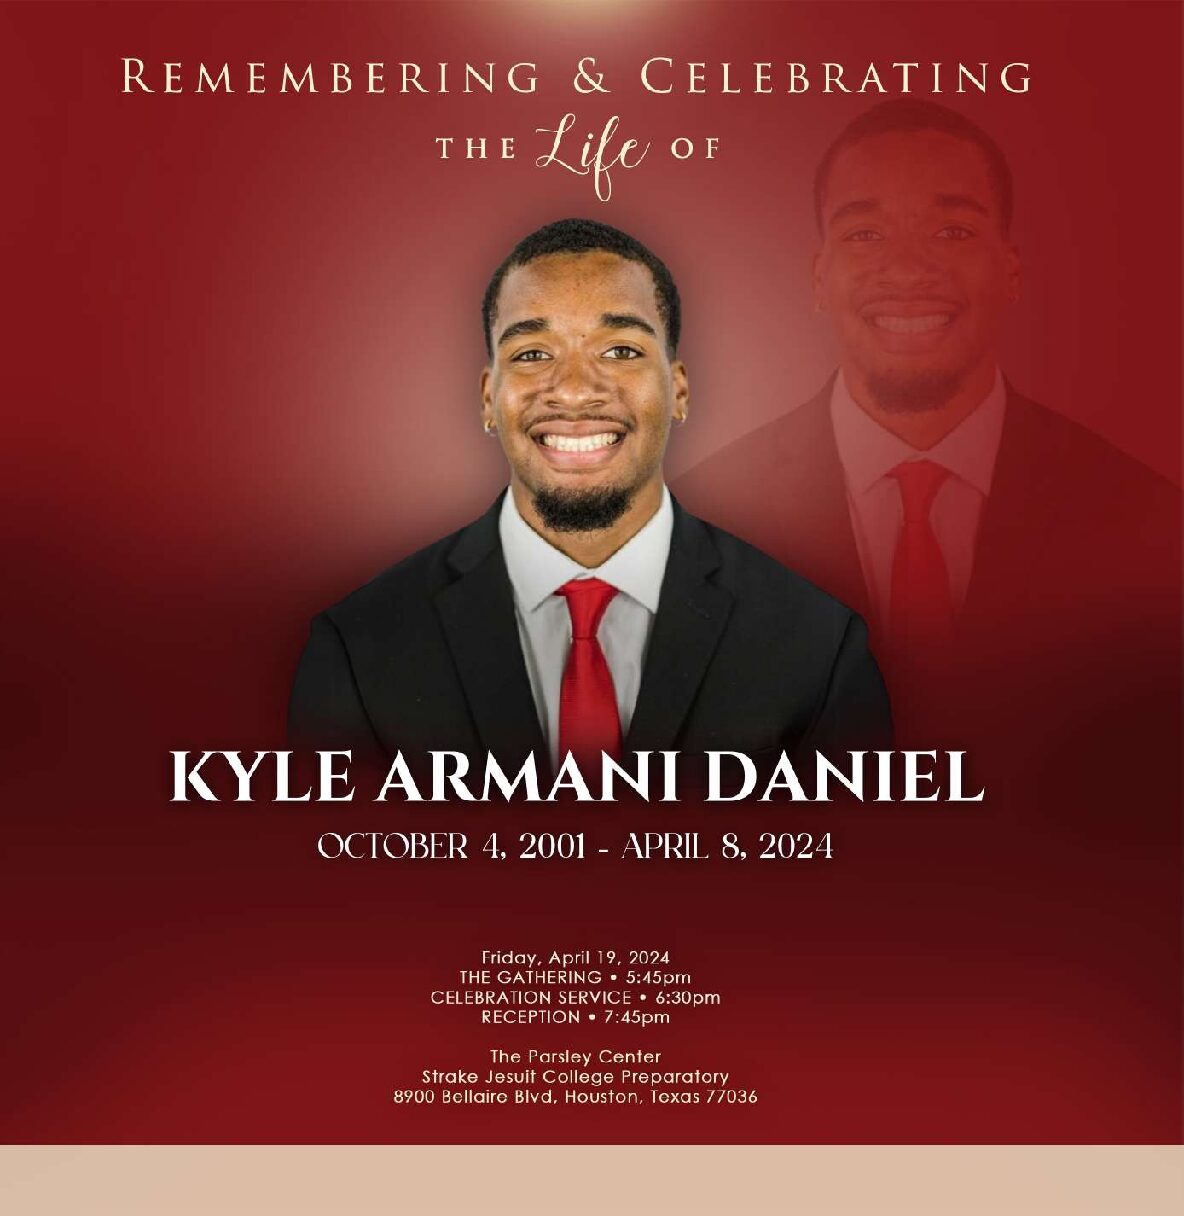 Kyle Armani Daniel 2001-2024